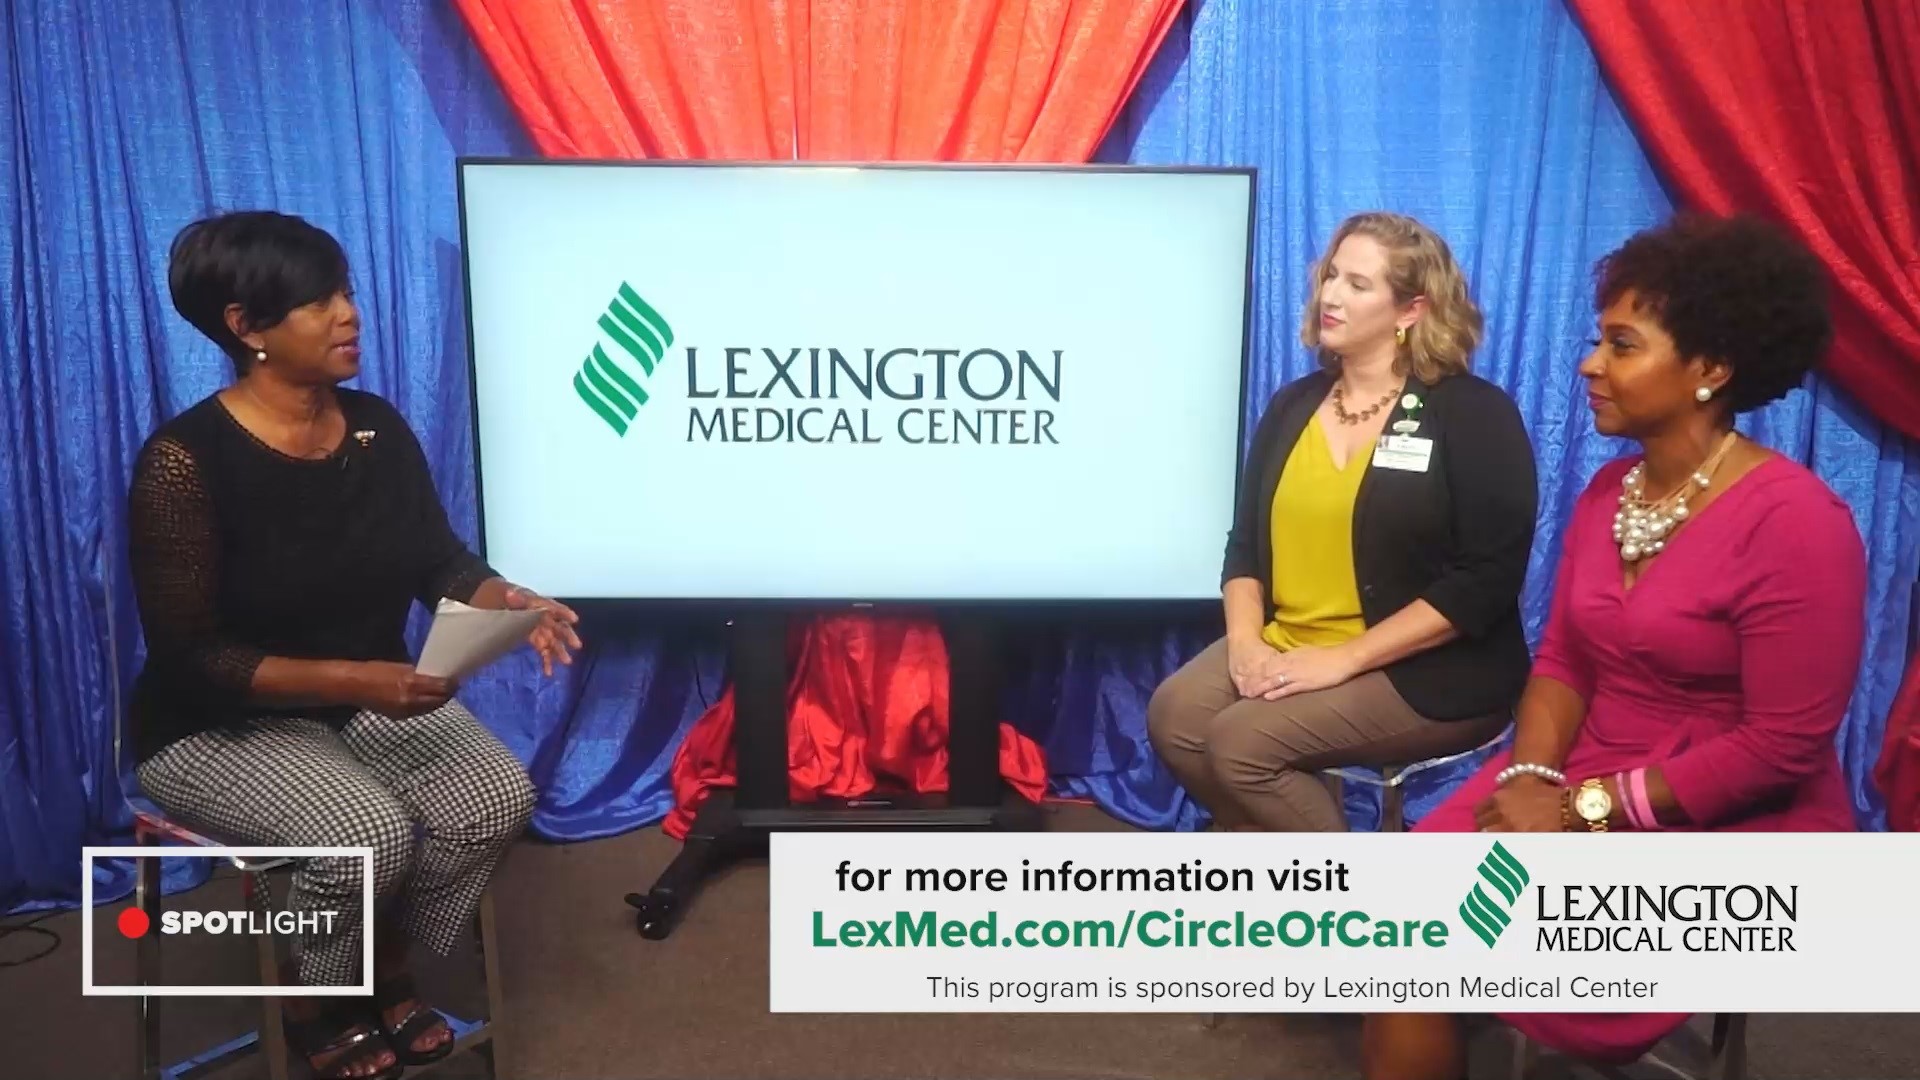 Lauren Peebles with the Lexington Medical Center Foundation and breast cancer survivor Ariella Hughes talk about Lexington Medical Center’s Circle of Care program.